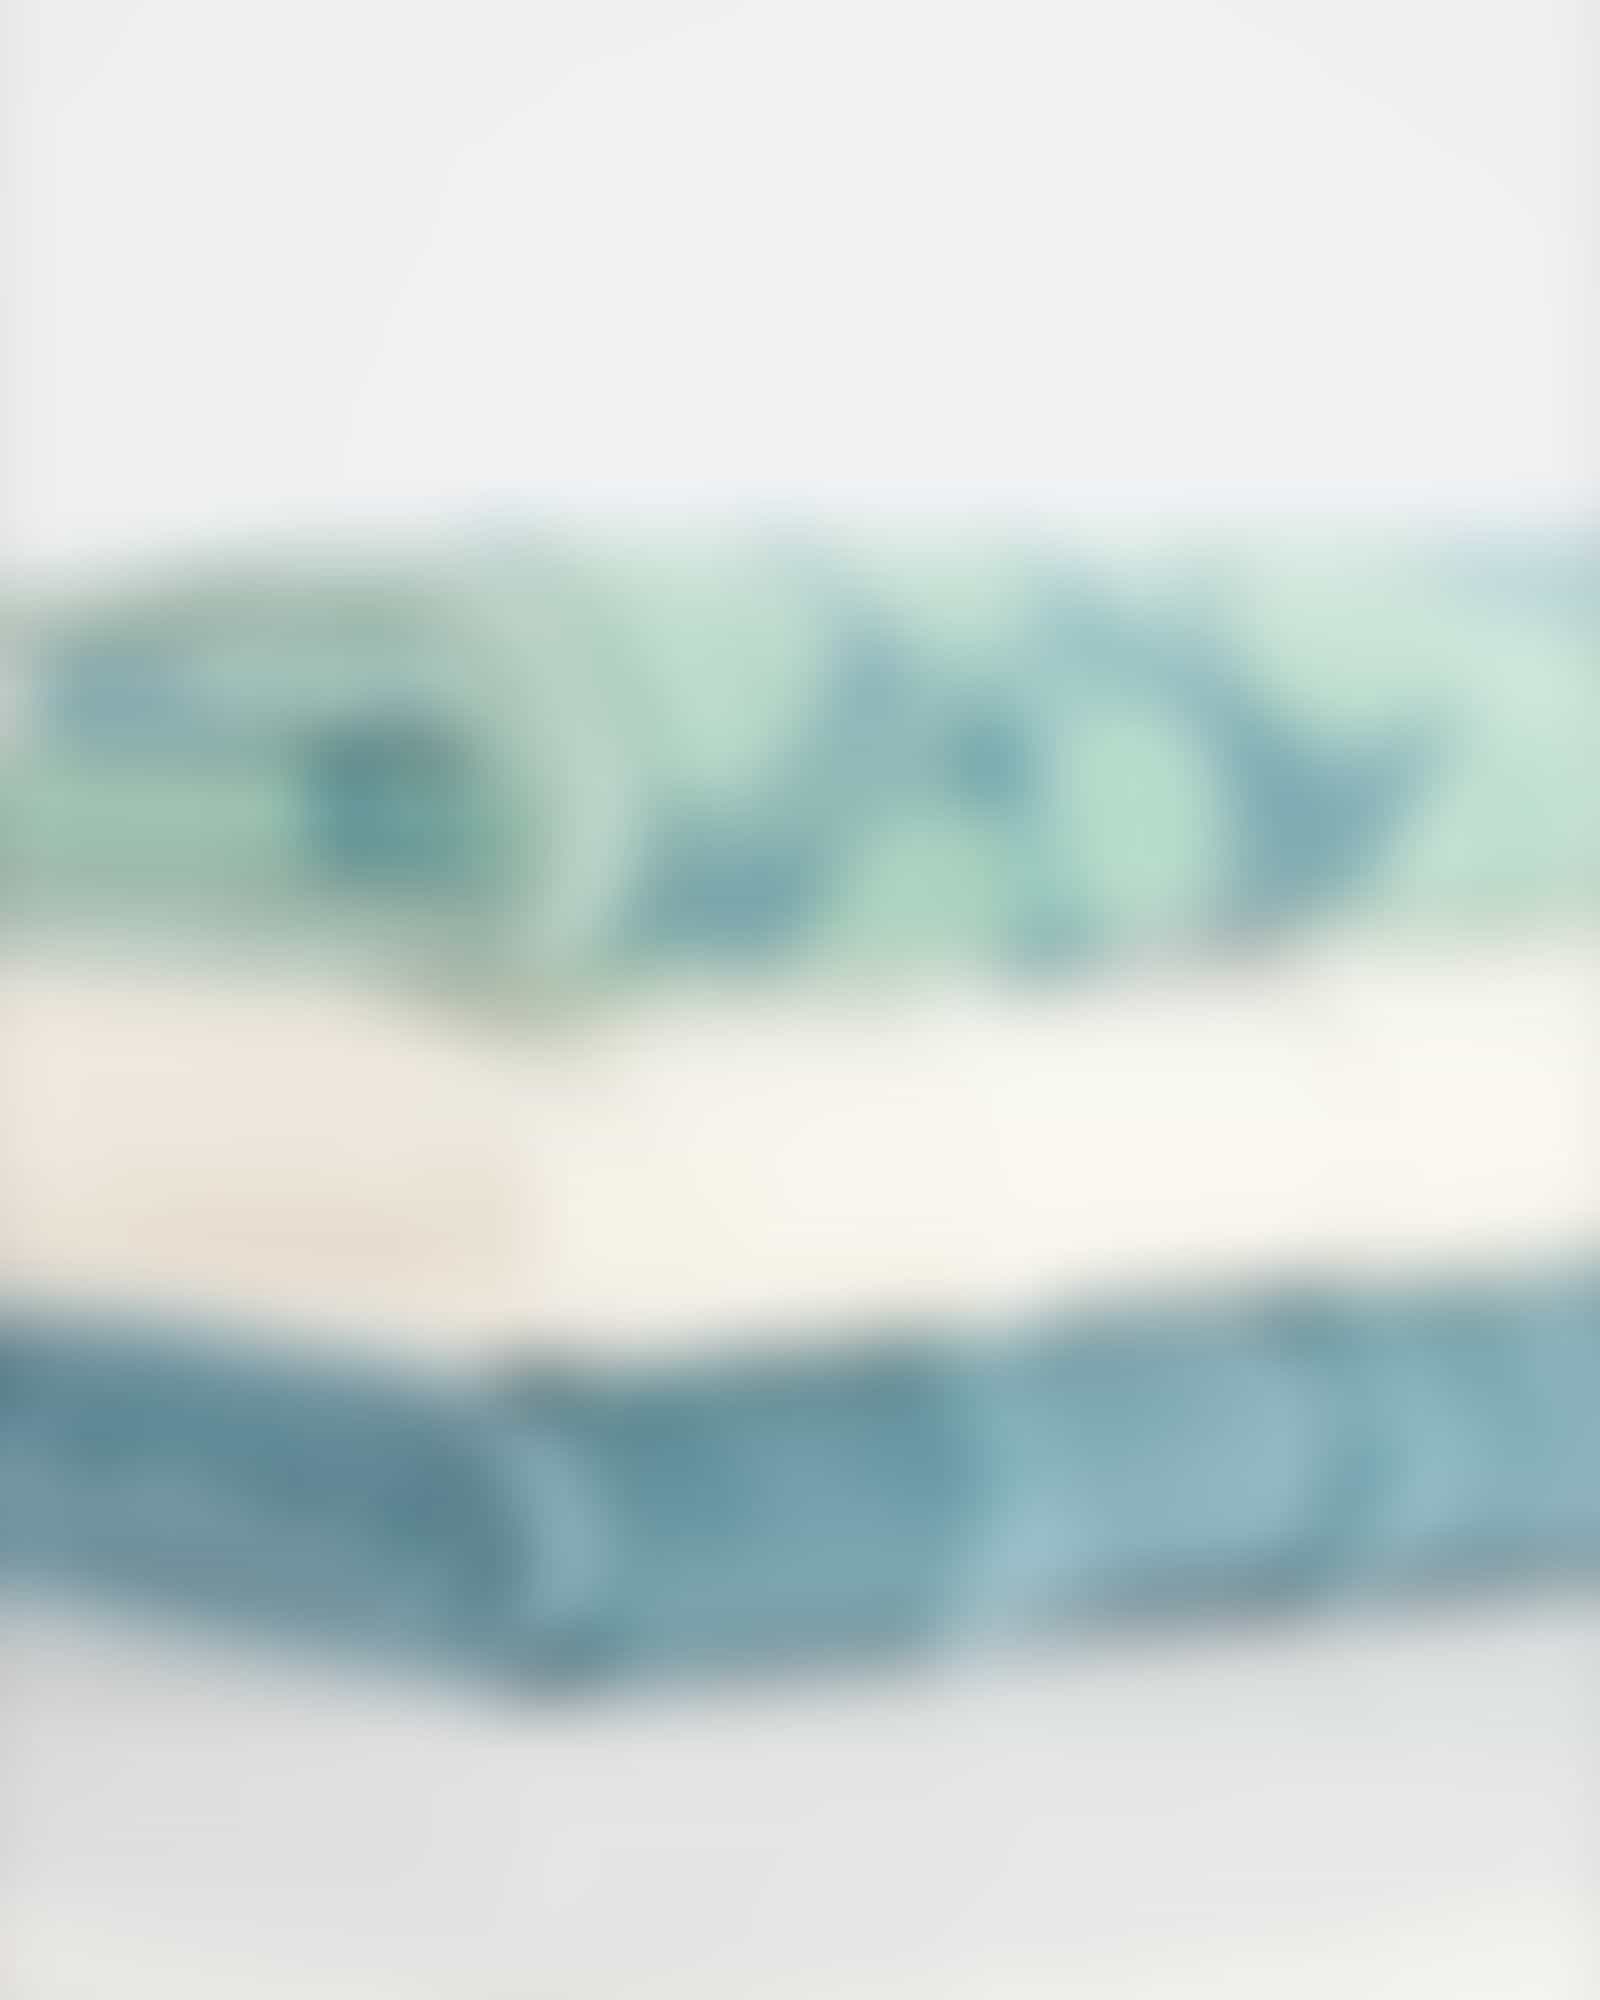 Cawö Handtücher Noblesse Harmony Floral 1086 - Farbe: jade - 47 - Duschtuch 80x160 cm